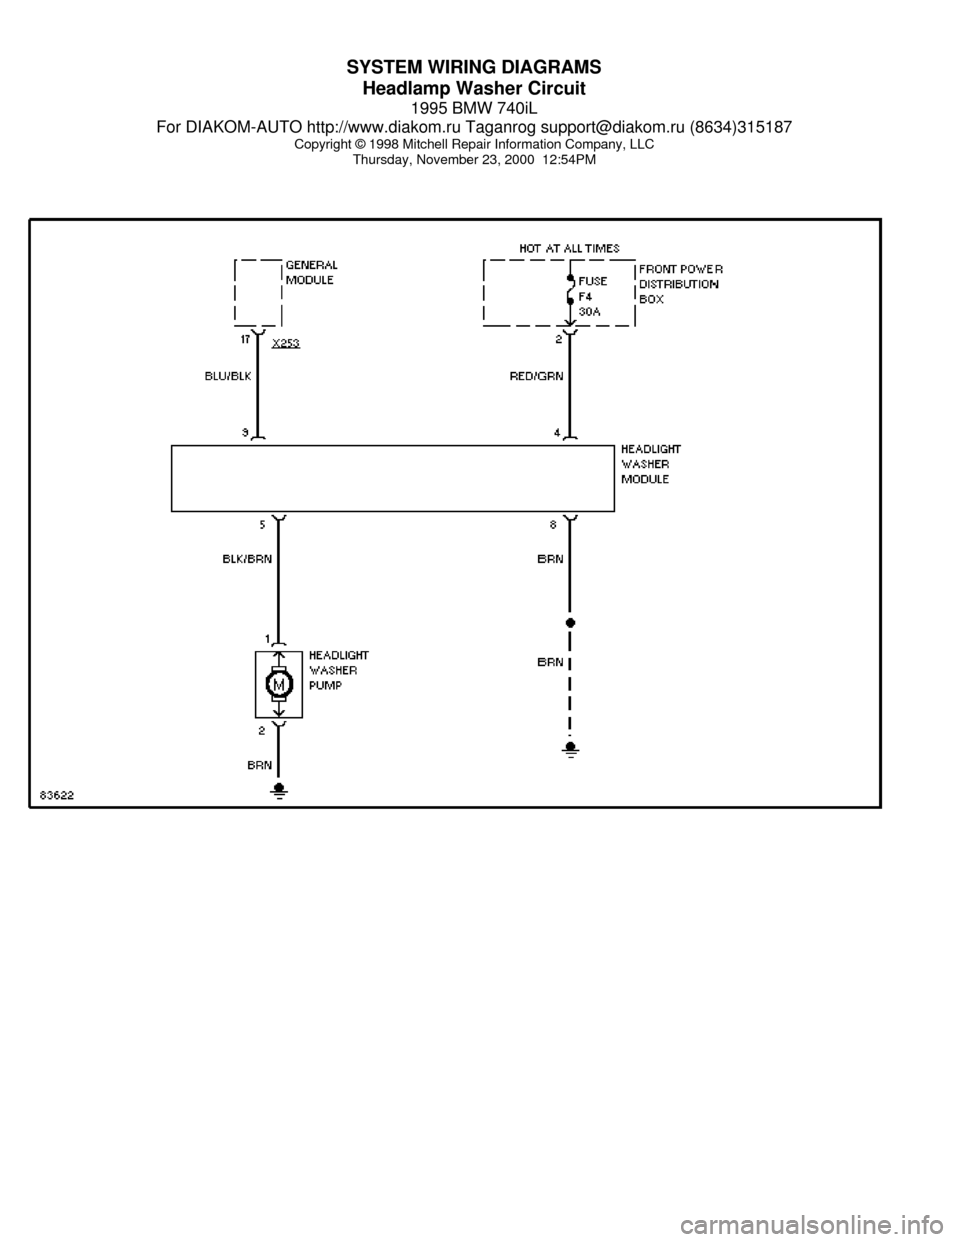 BMW 740il 1995 E38 System Wiring Diagrams SYSTEM WIRING DIAGRAMS
Headlamp Washer Circuit
1995 BMW 740iL
For DIAKOM-AUTO http://www.diakom.ru Taganrog support@diakom.ru (8634)315187
Copyright © 1998 Mitchell Repair Information Company, LLC
Th